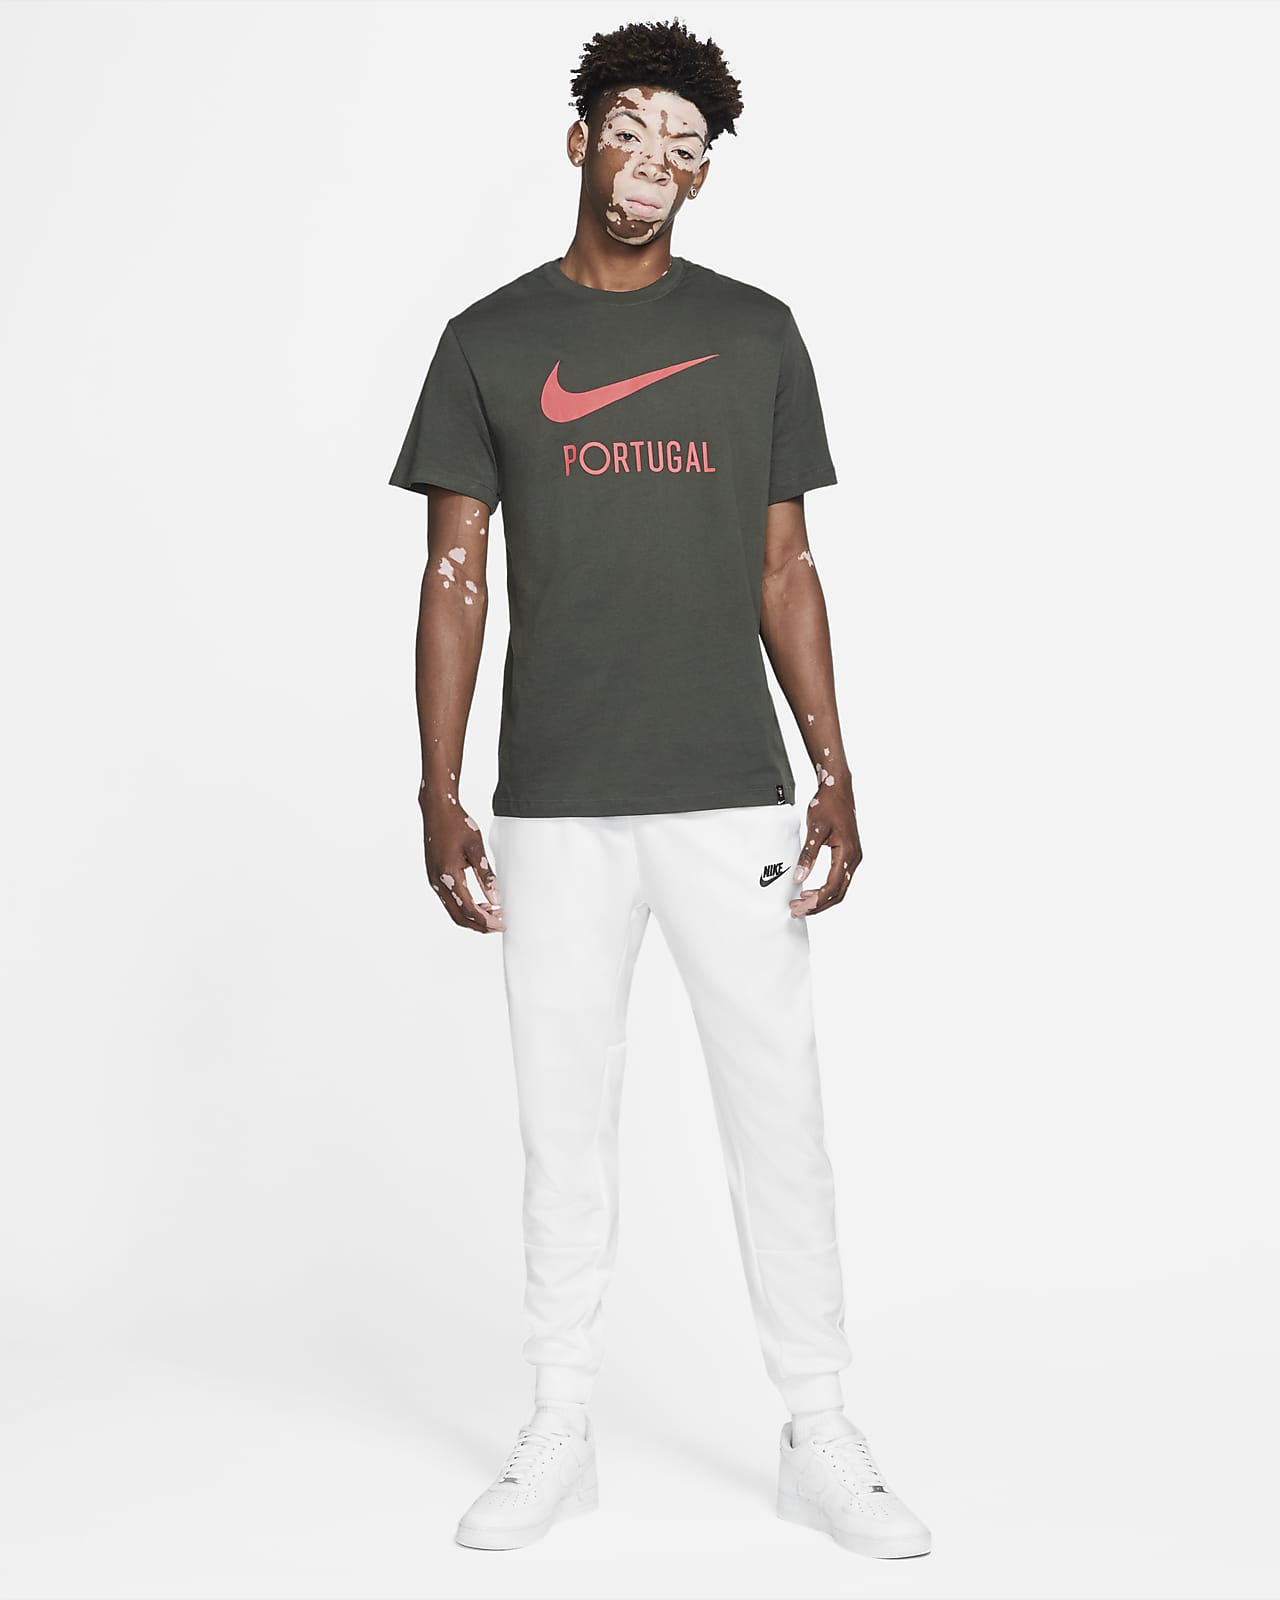 Portugal Men's Soccer T-Shirt. Nike.com